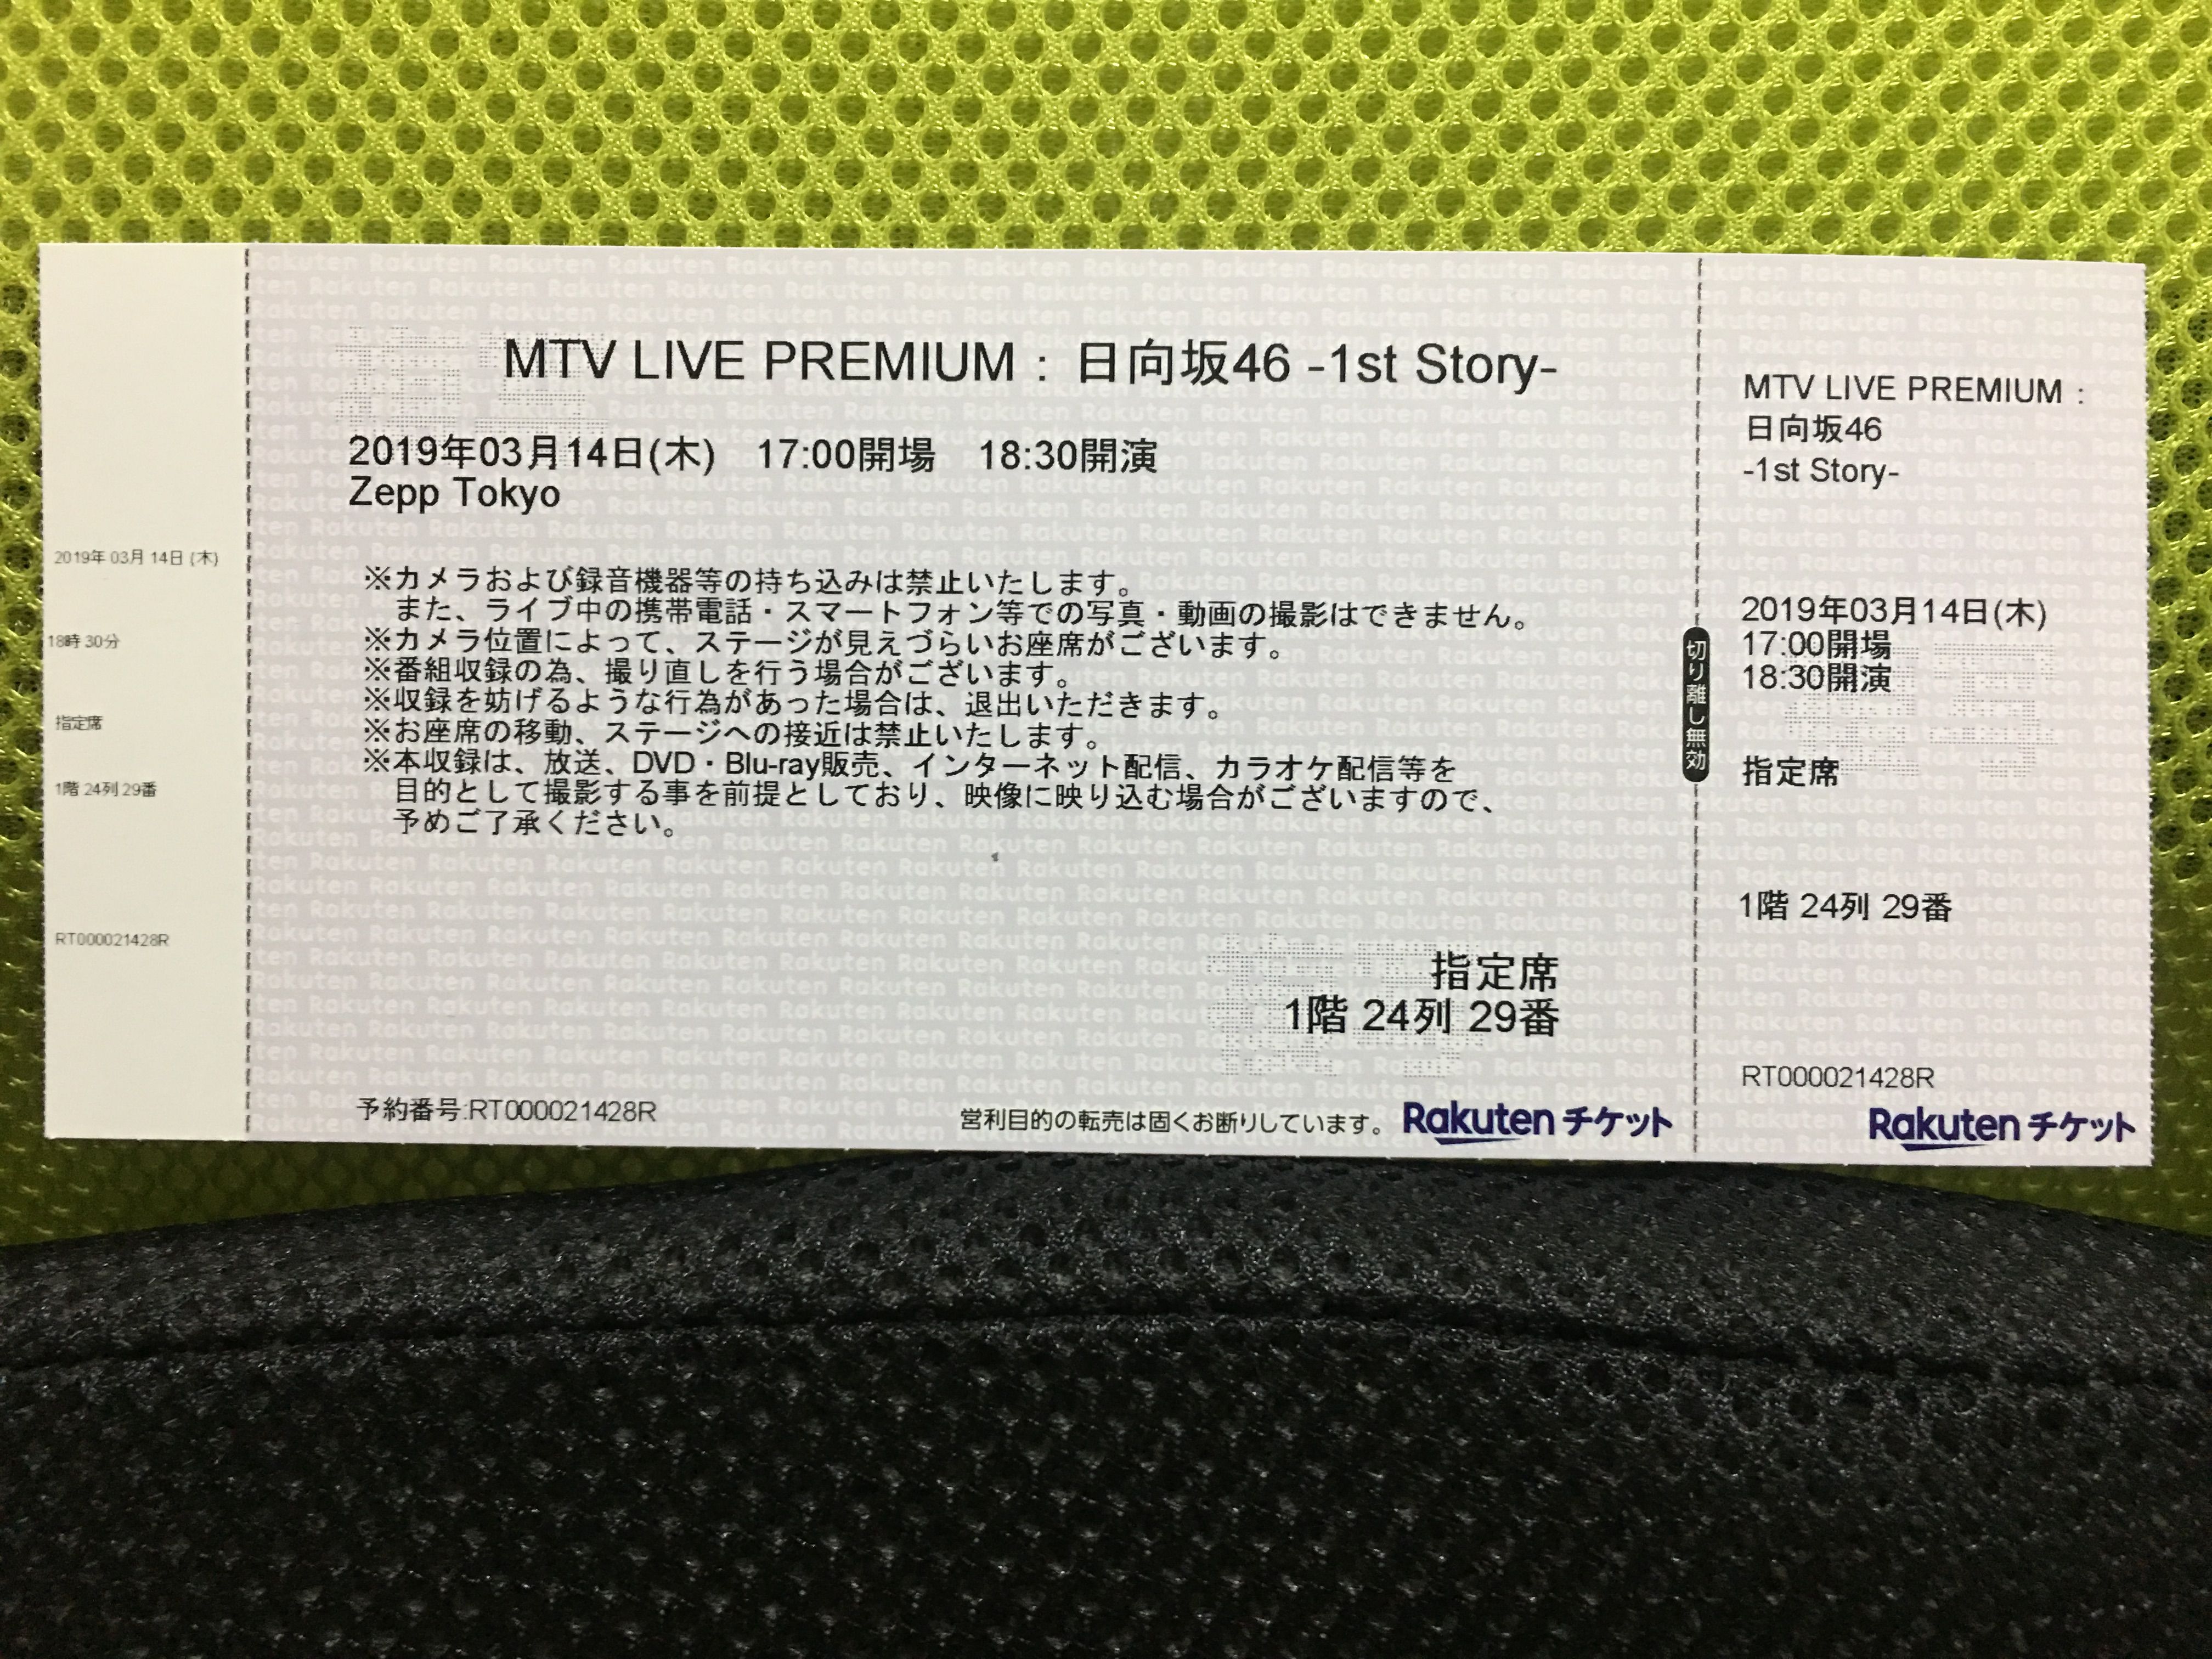 MTV LIVE PREMIUM:日向坂46-1st Story-の番組観覧に行ってきた